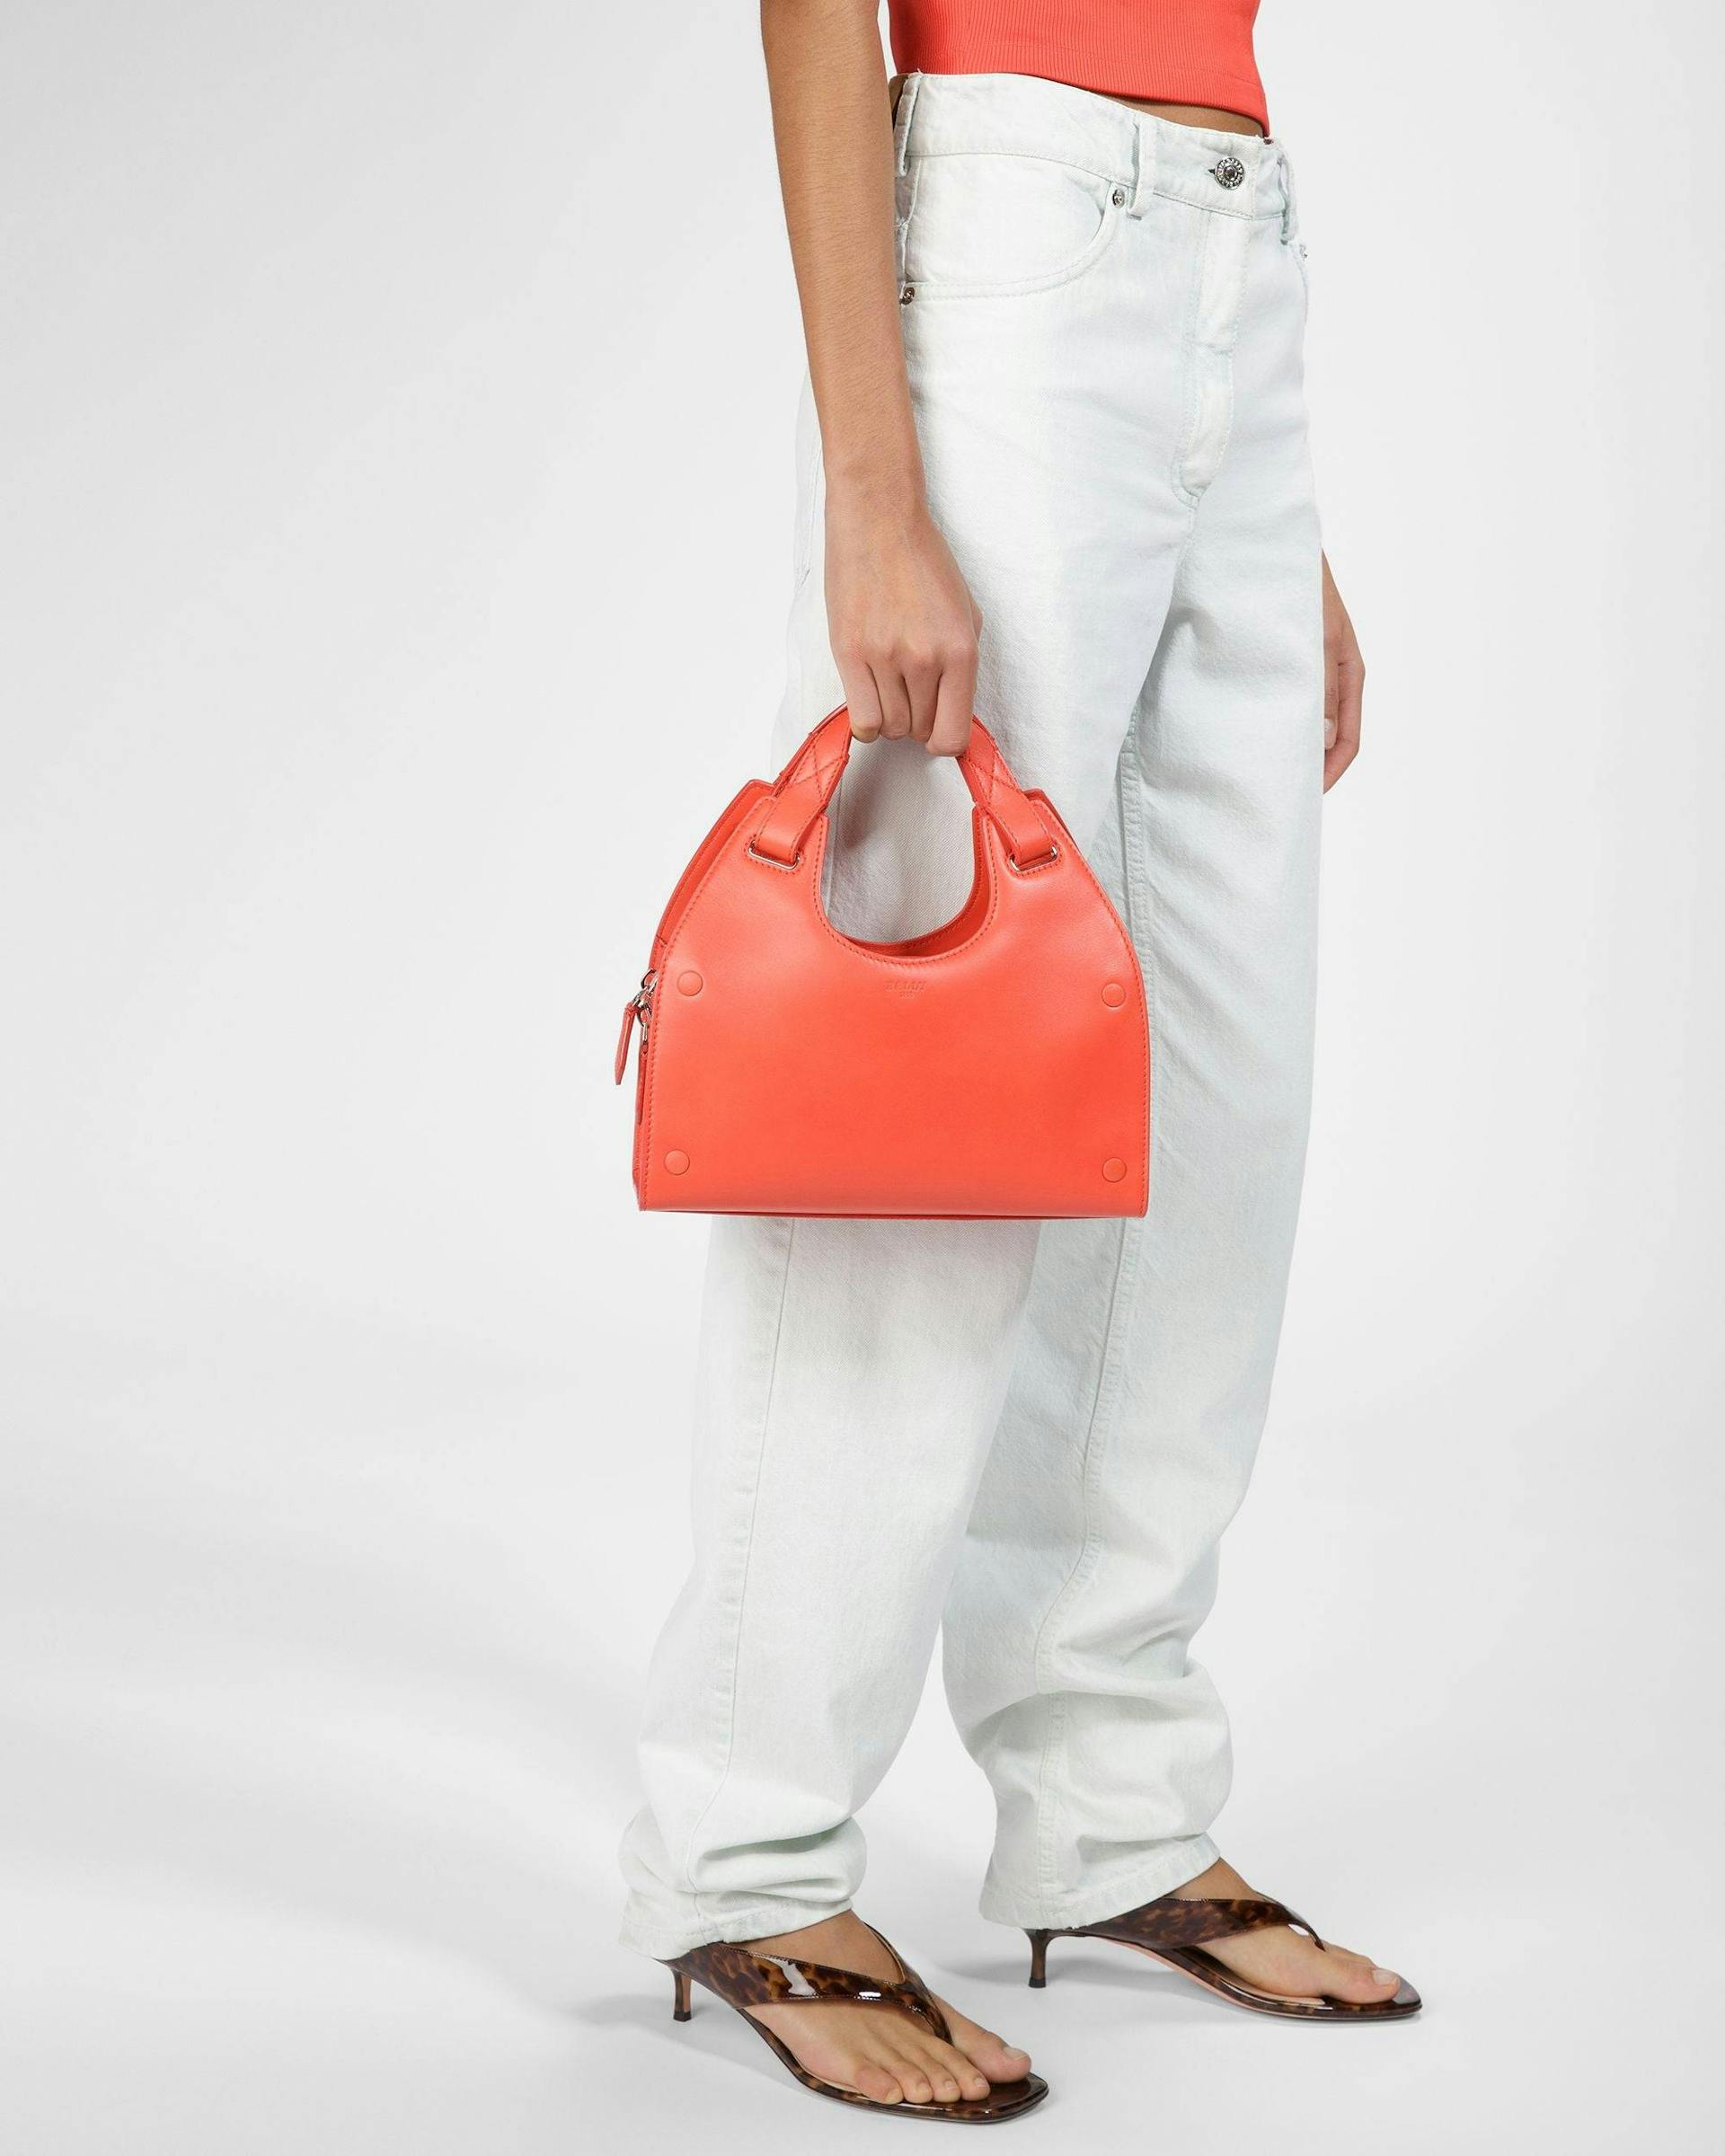 Ahres S Leather Crossbody Bag In Orange - Women's - Bally - 07